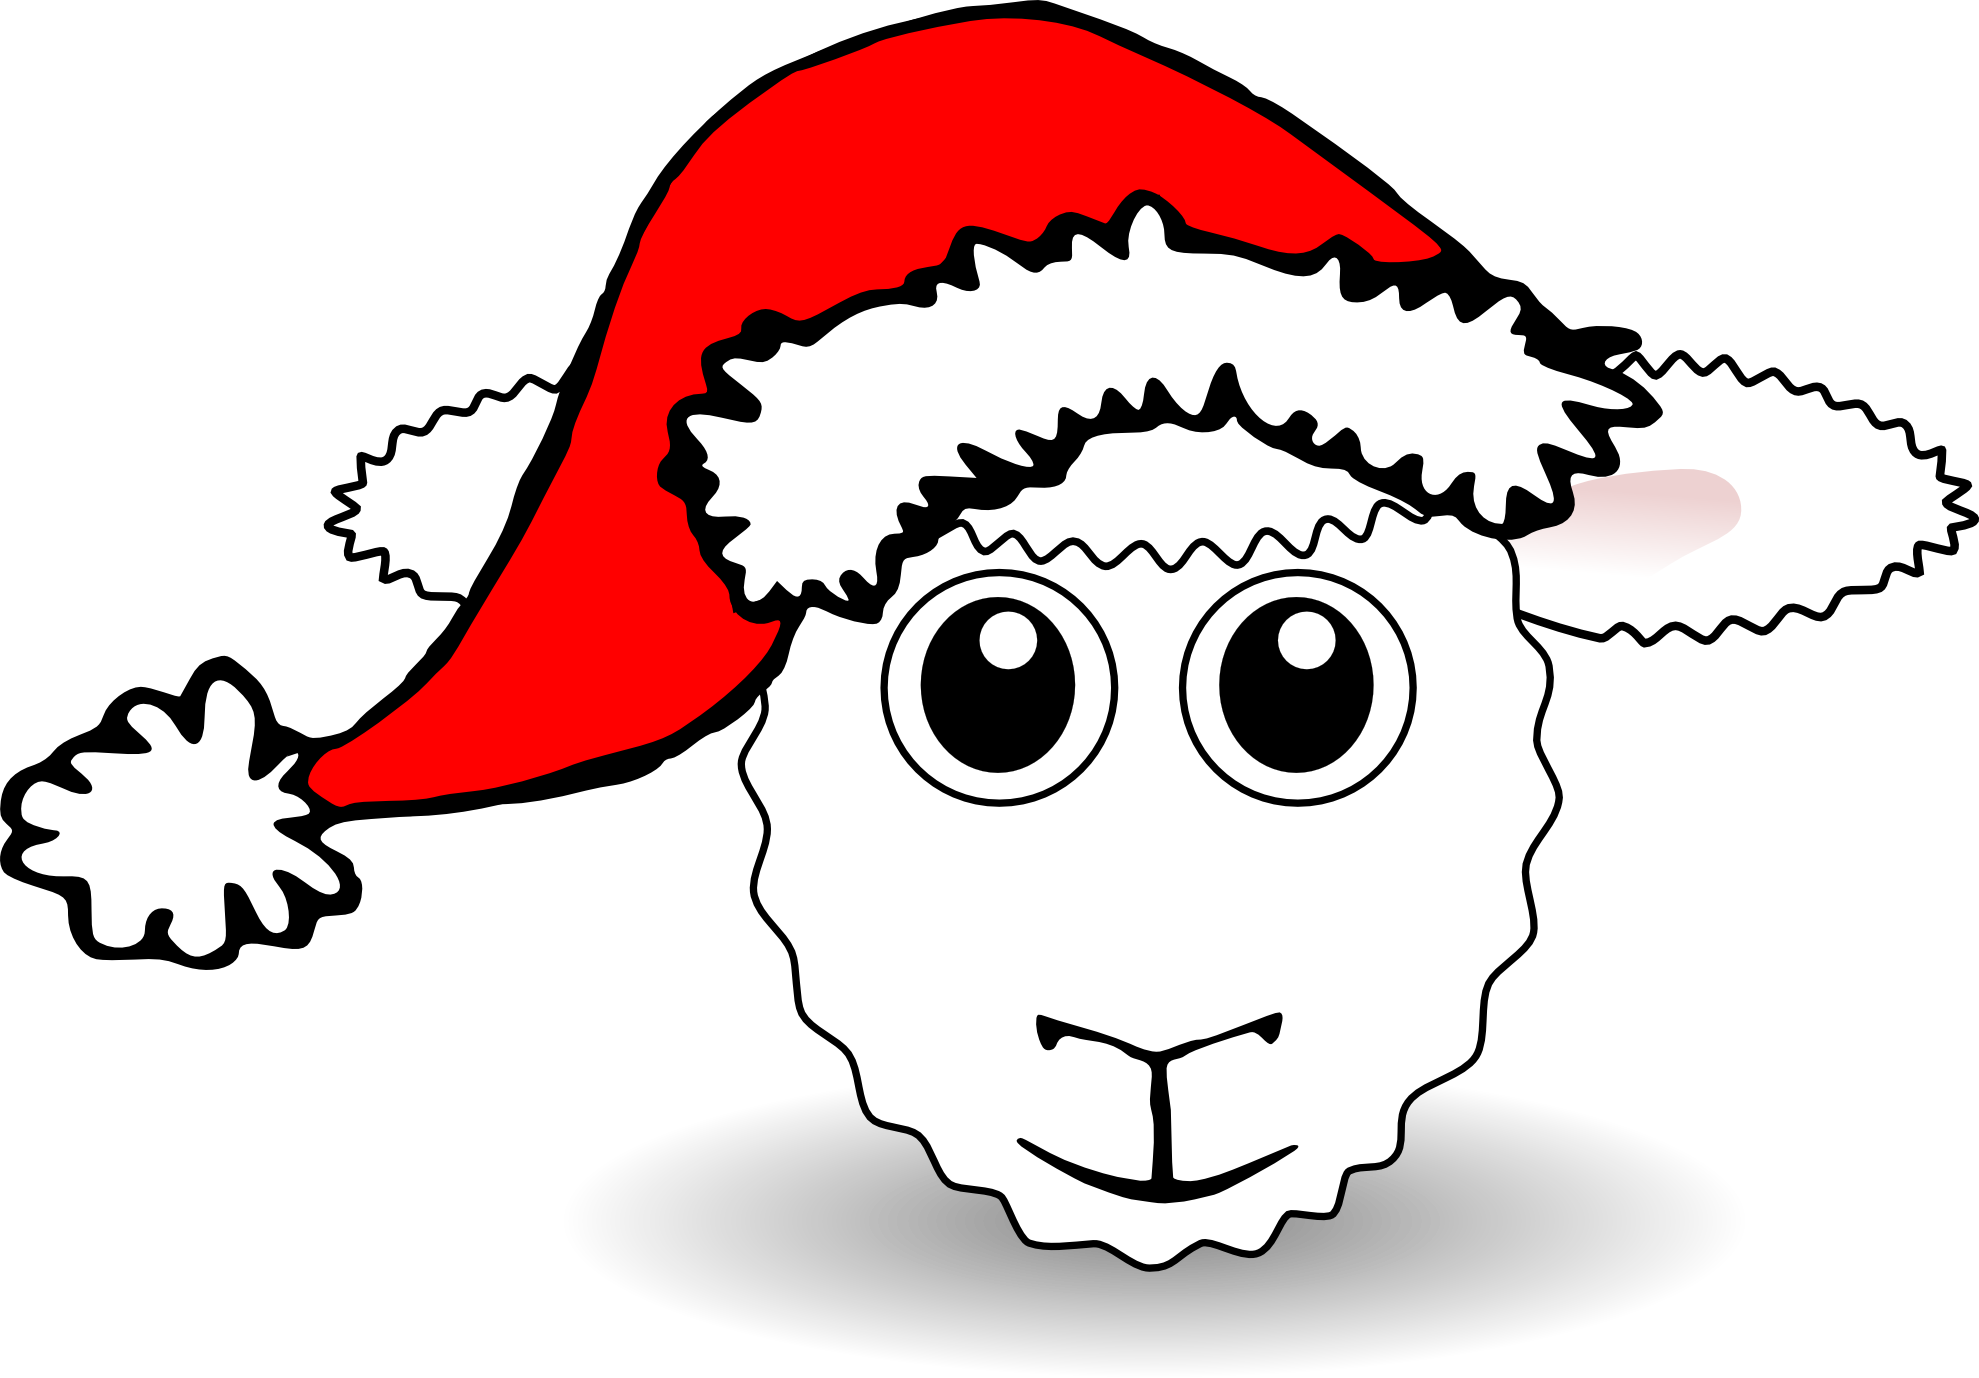 Clip Art: palomaironique sheep face cartoon with ...